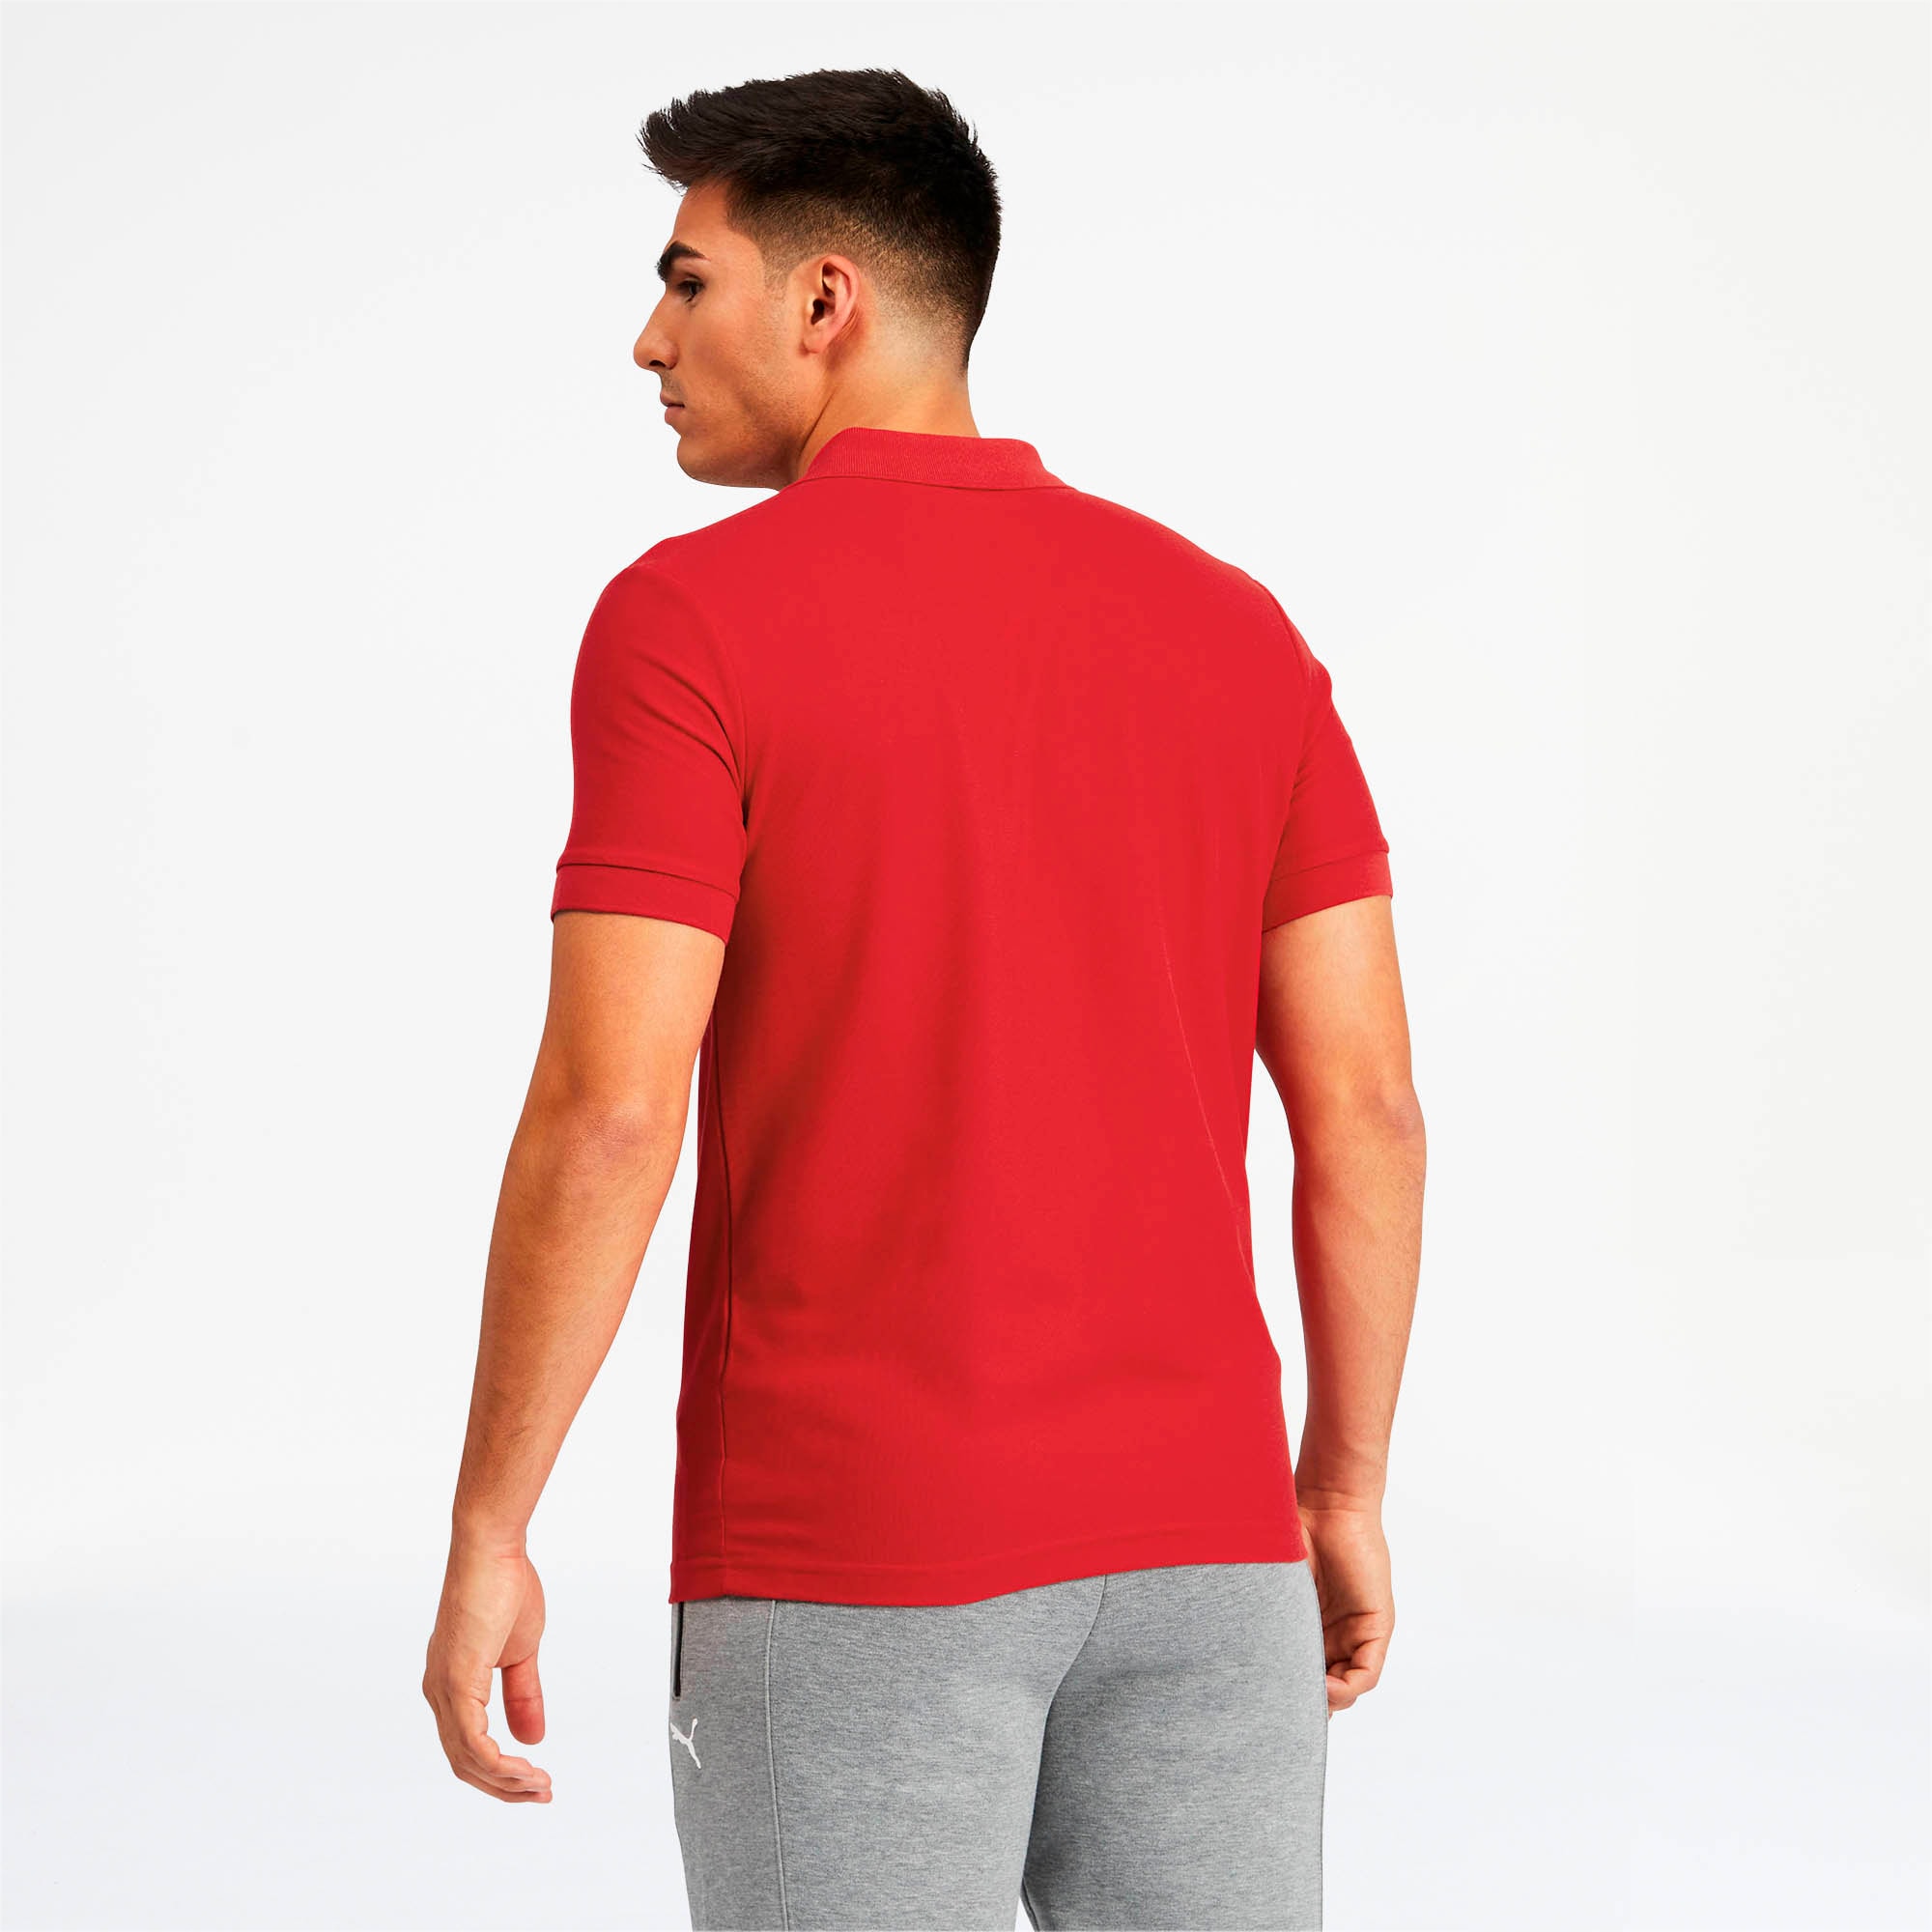 Ferrari Polo Shirts for Men - Shop Now on FARFETCH